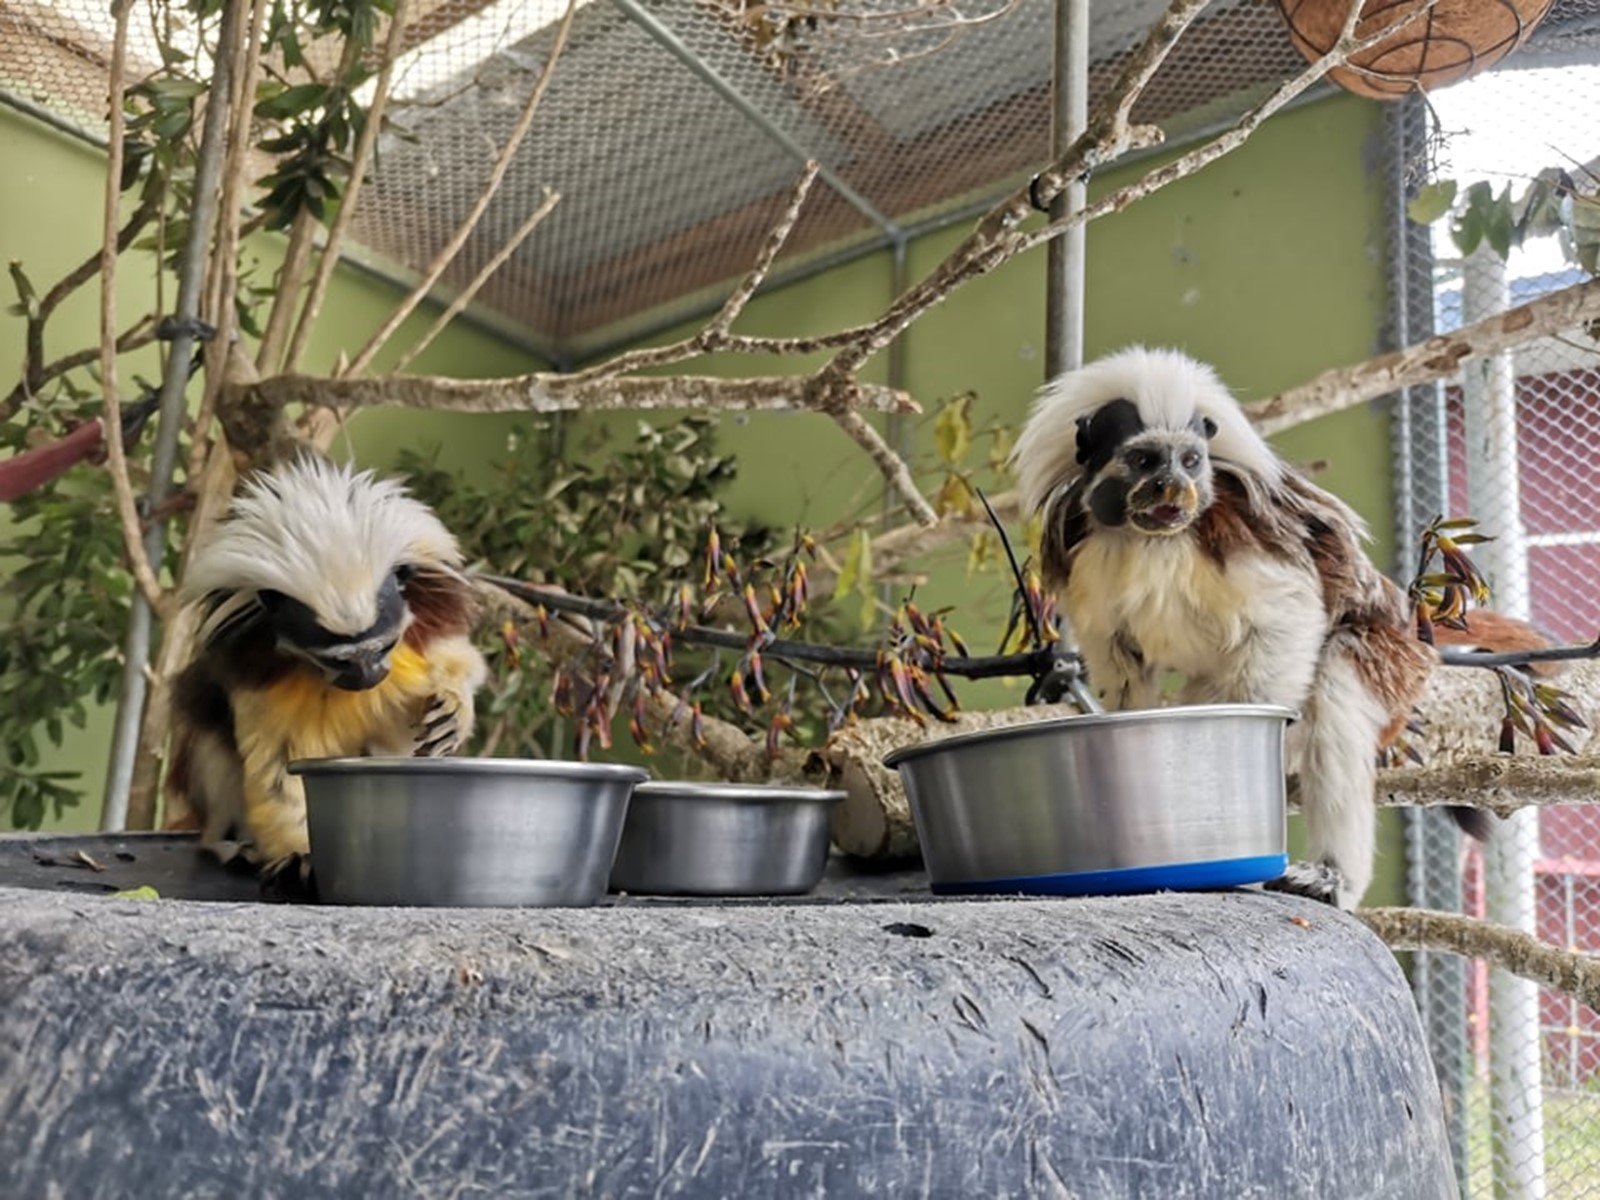 Cotton-top tamarin monkeys Teo and Inca eating food